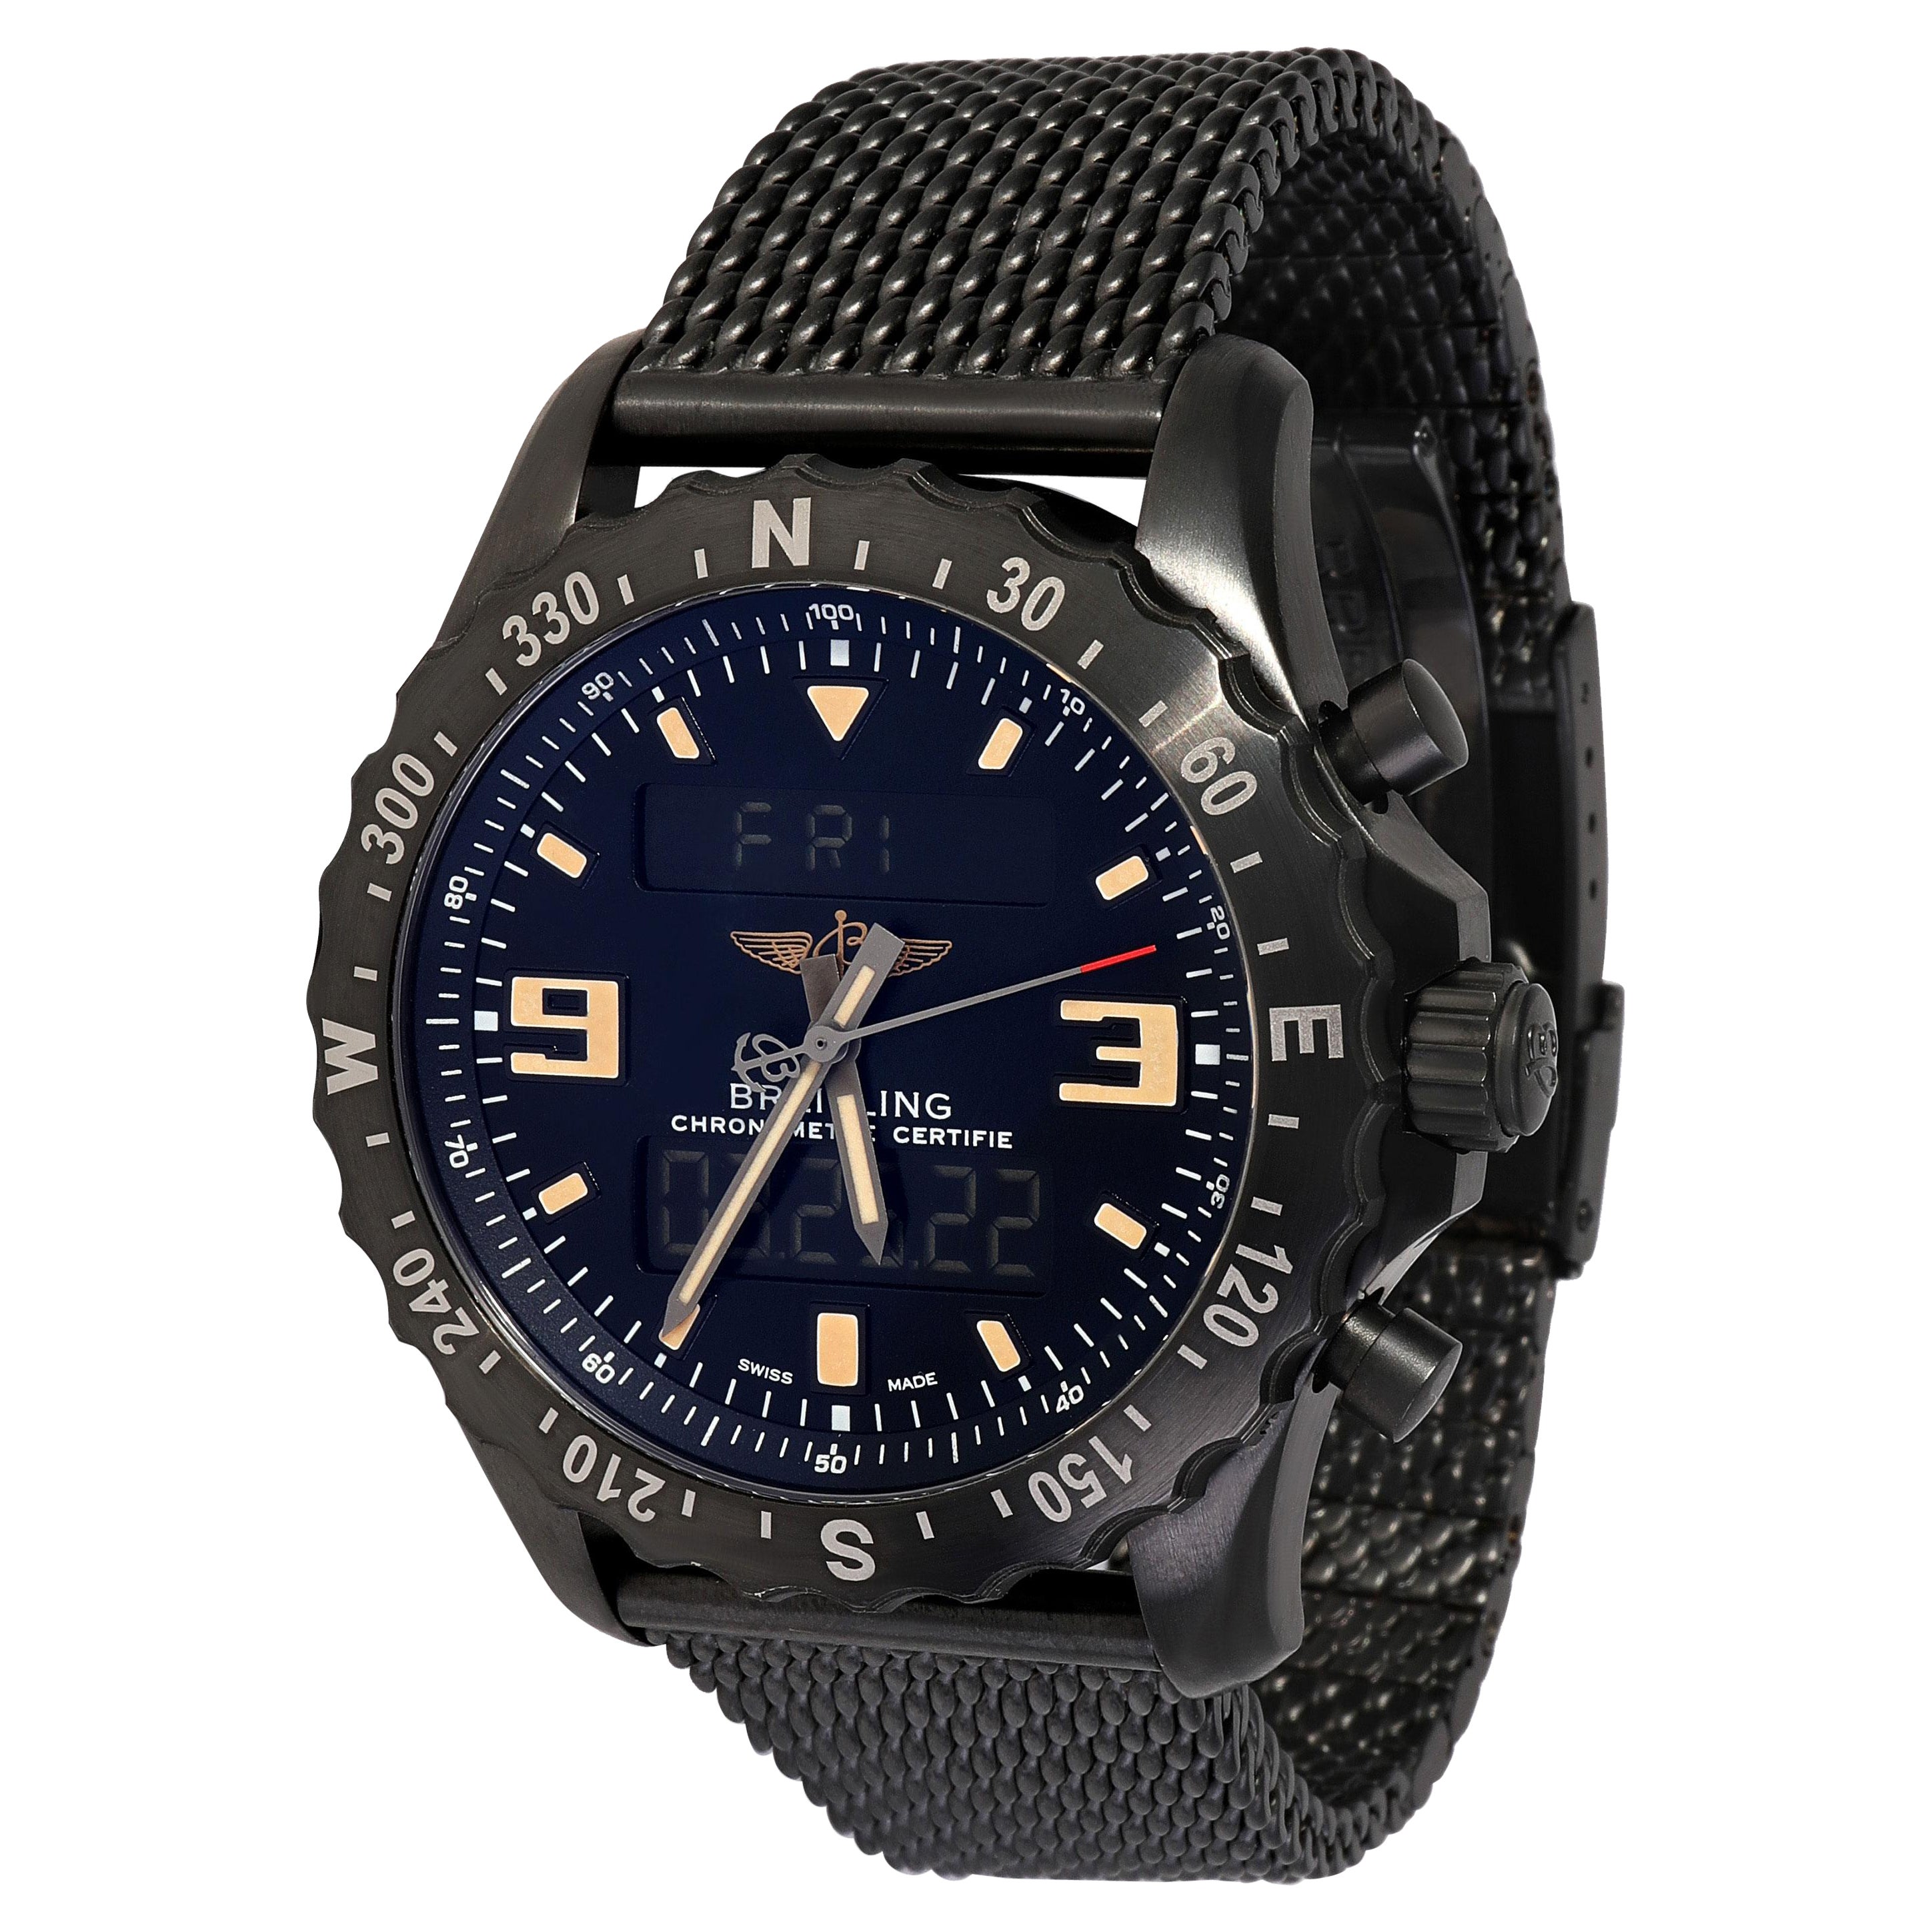 Breitling Chronospace Military M7836622/B039 Men's Watch in  Black Steel